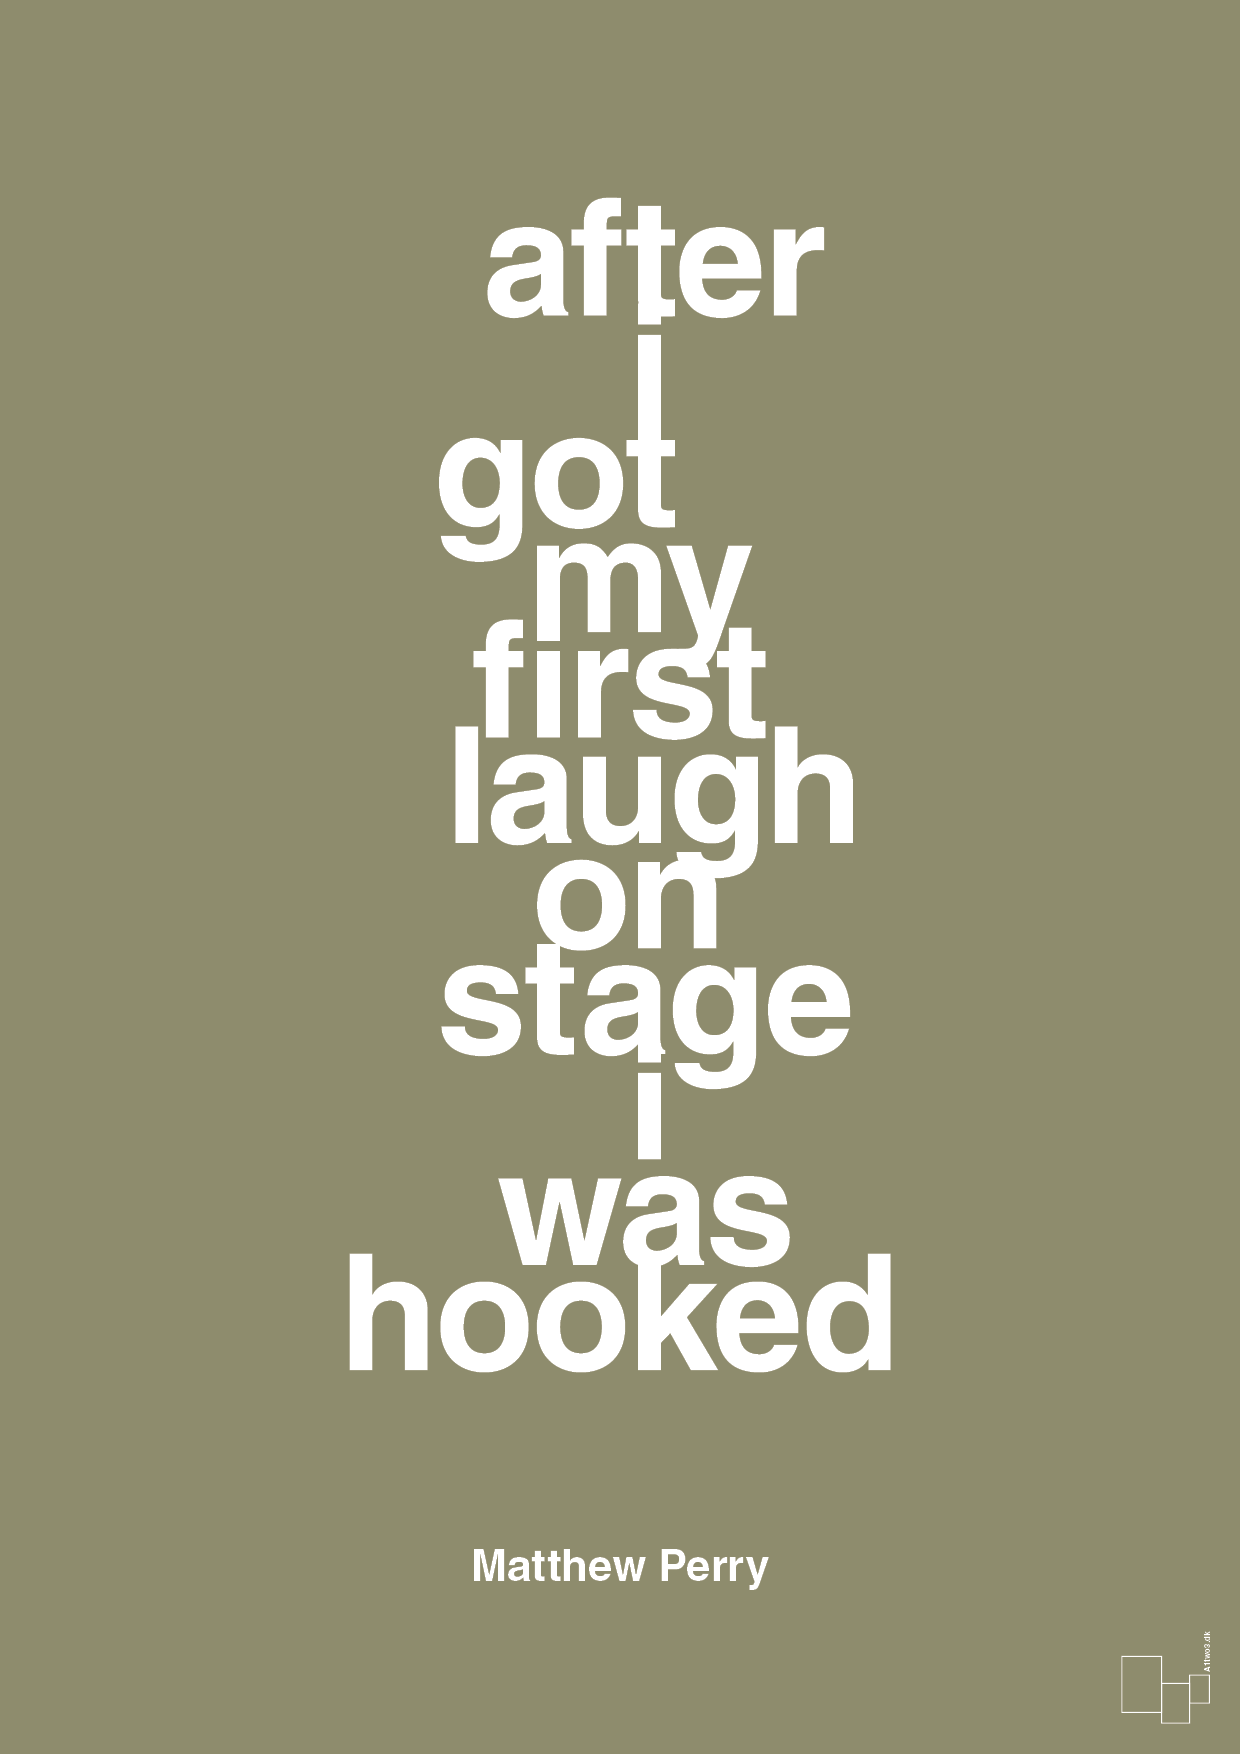 after i got my first laugh on stage i was hooked - Plakat med Citater i Misty Forrest